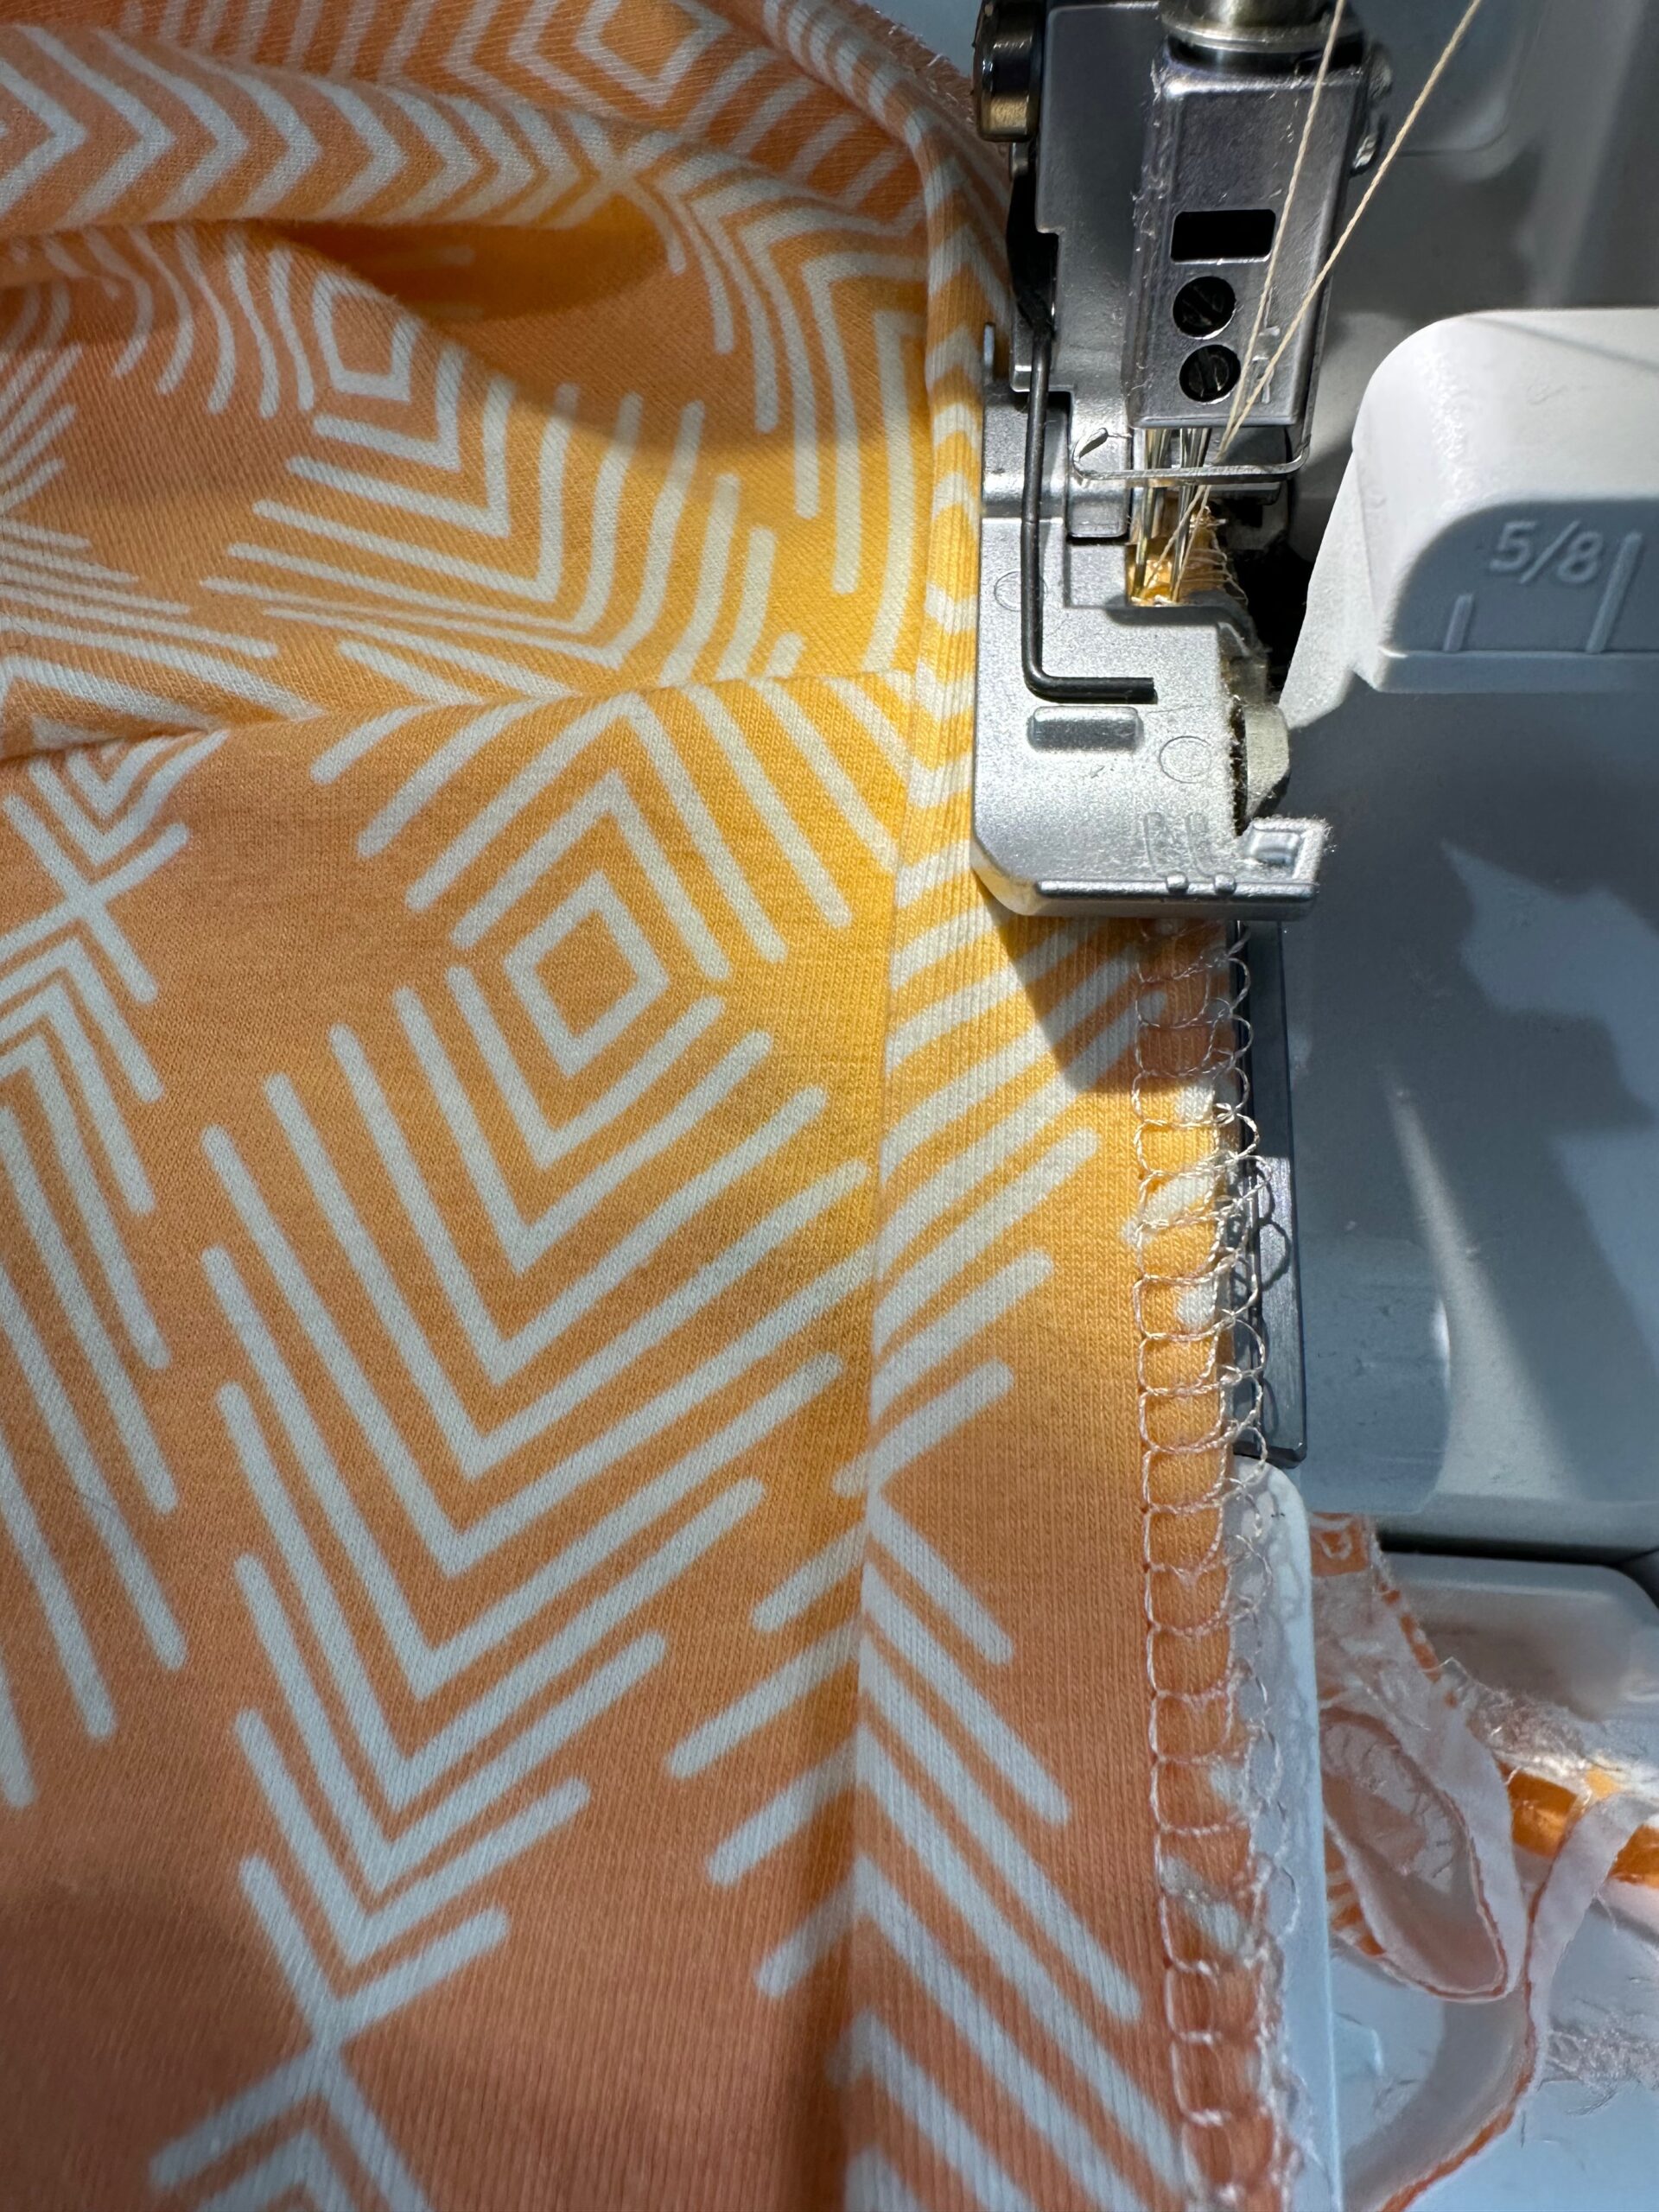 Sewing Stretch Fabrics on a Basic Sewing Machine - Sew School Barnet